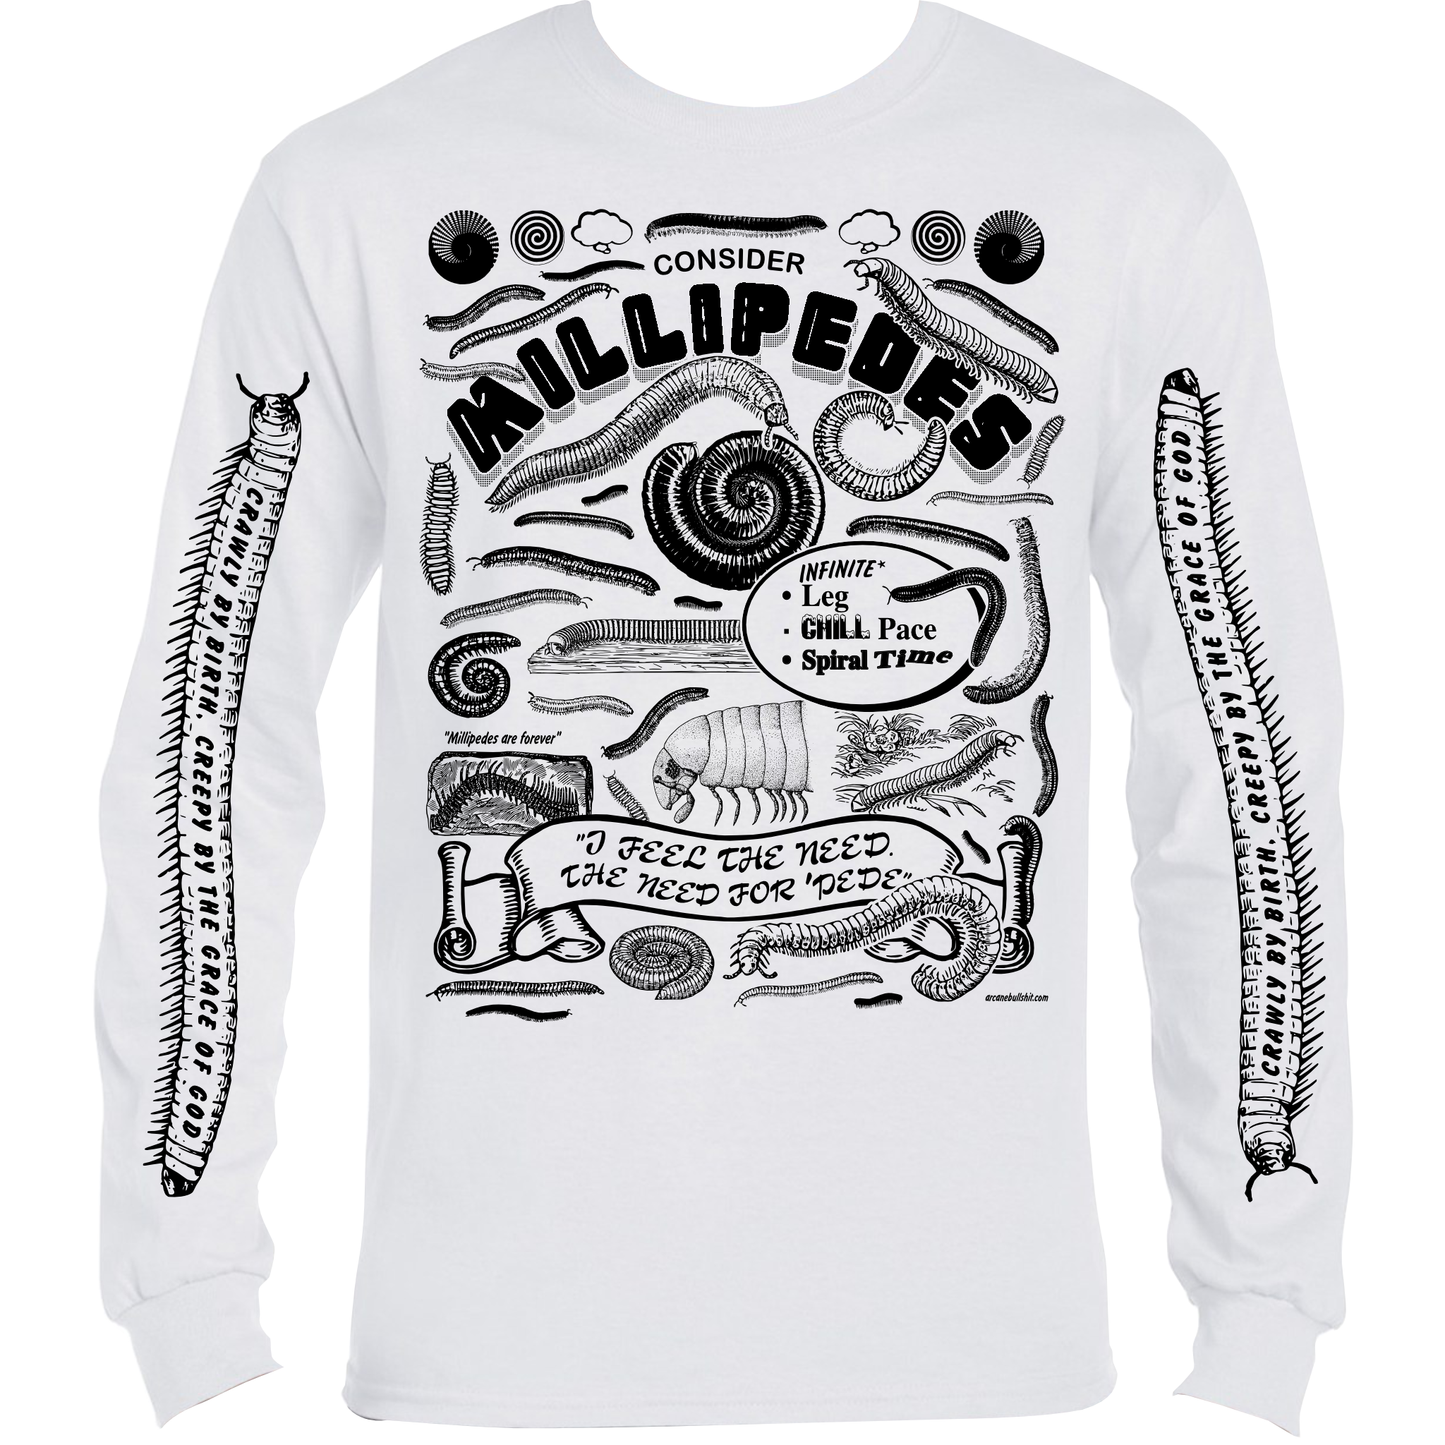 "Millipede" Long-Sleeved t-shirt